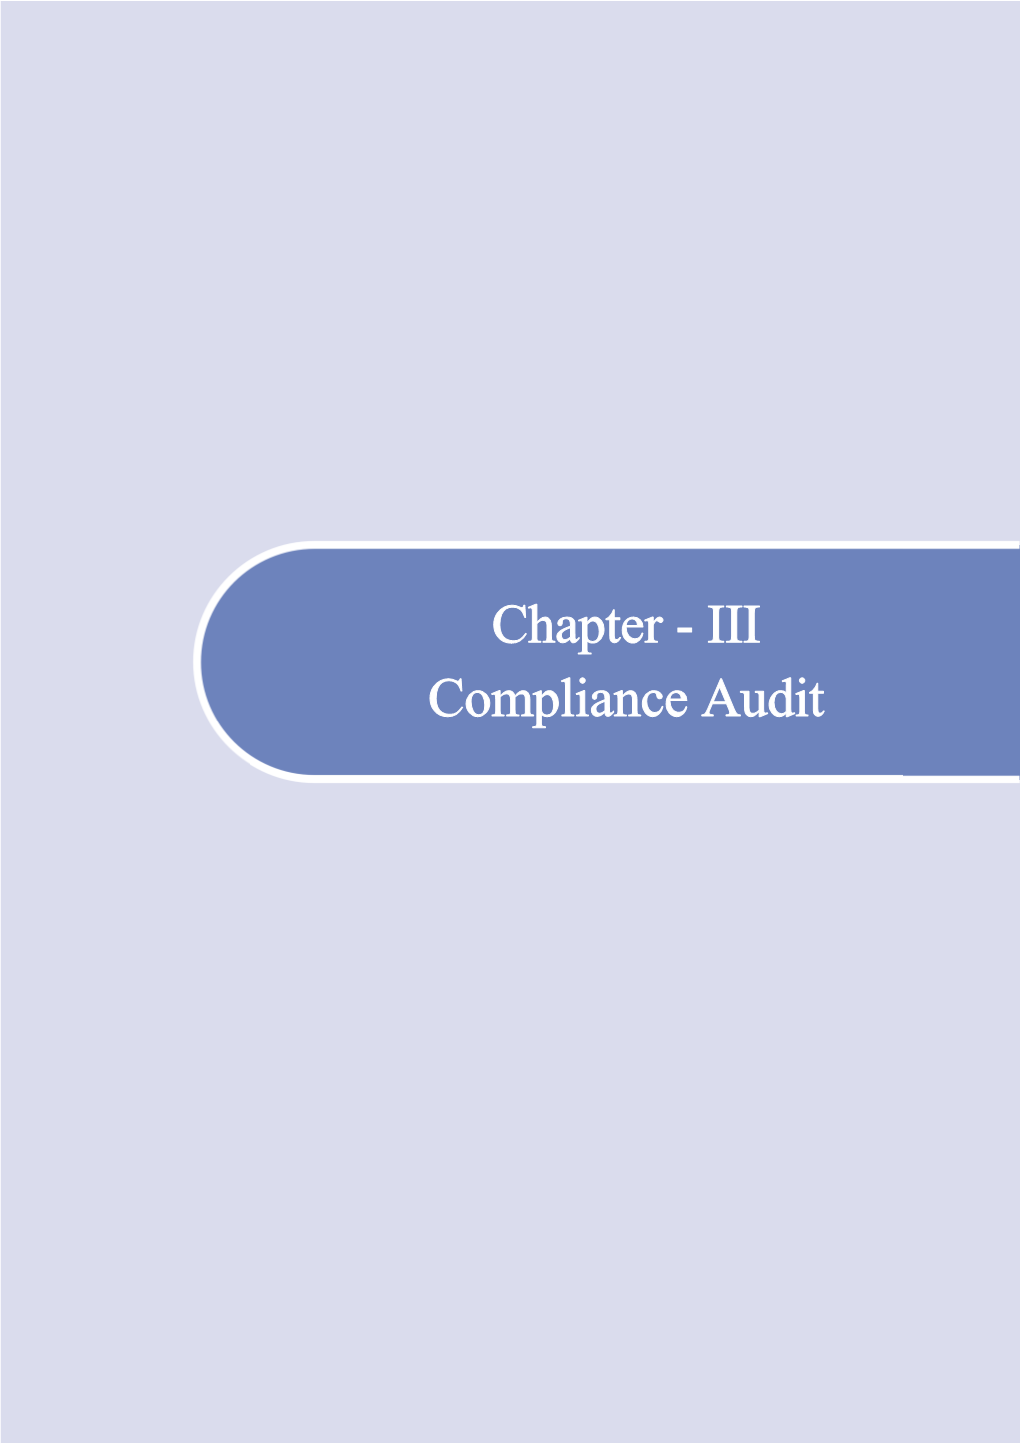 Chapter - III Compliance Audit